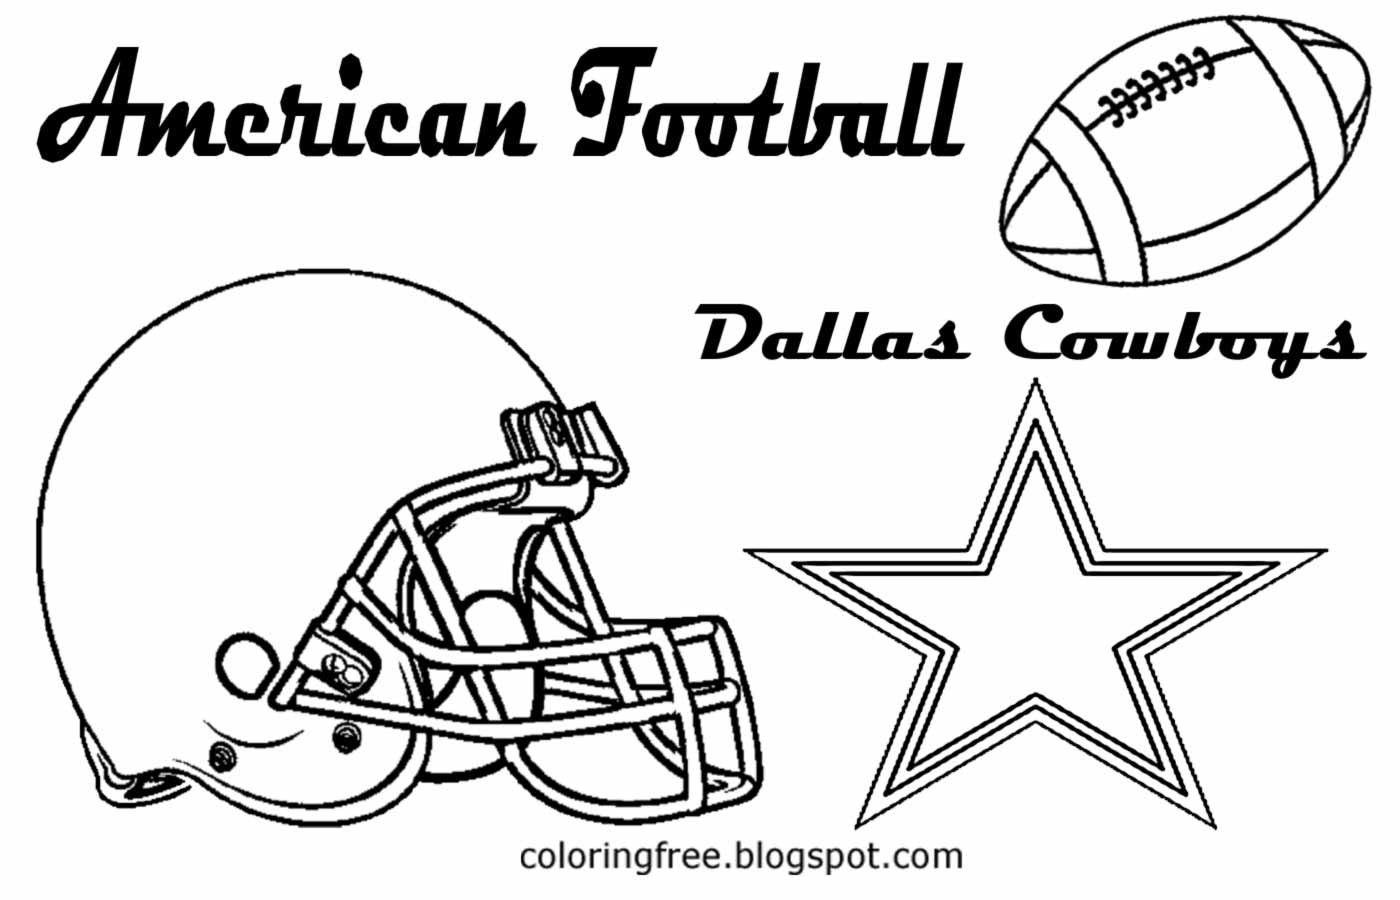 Dallas Cowboys Coloring Sheet
 Dallas Cowboys Coloring Pages Learny Kids